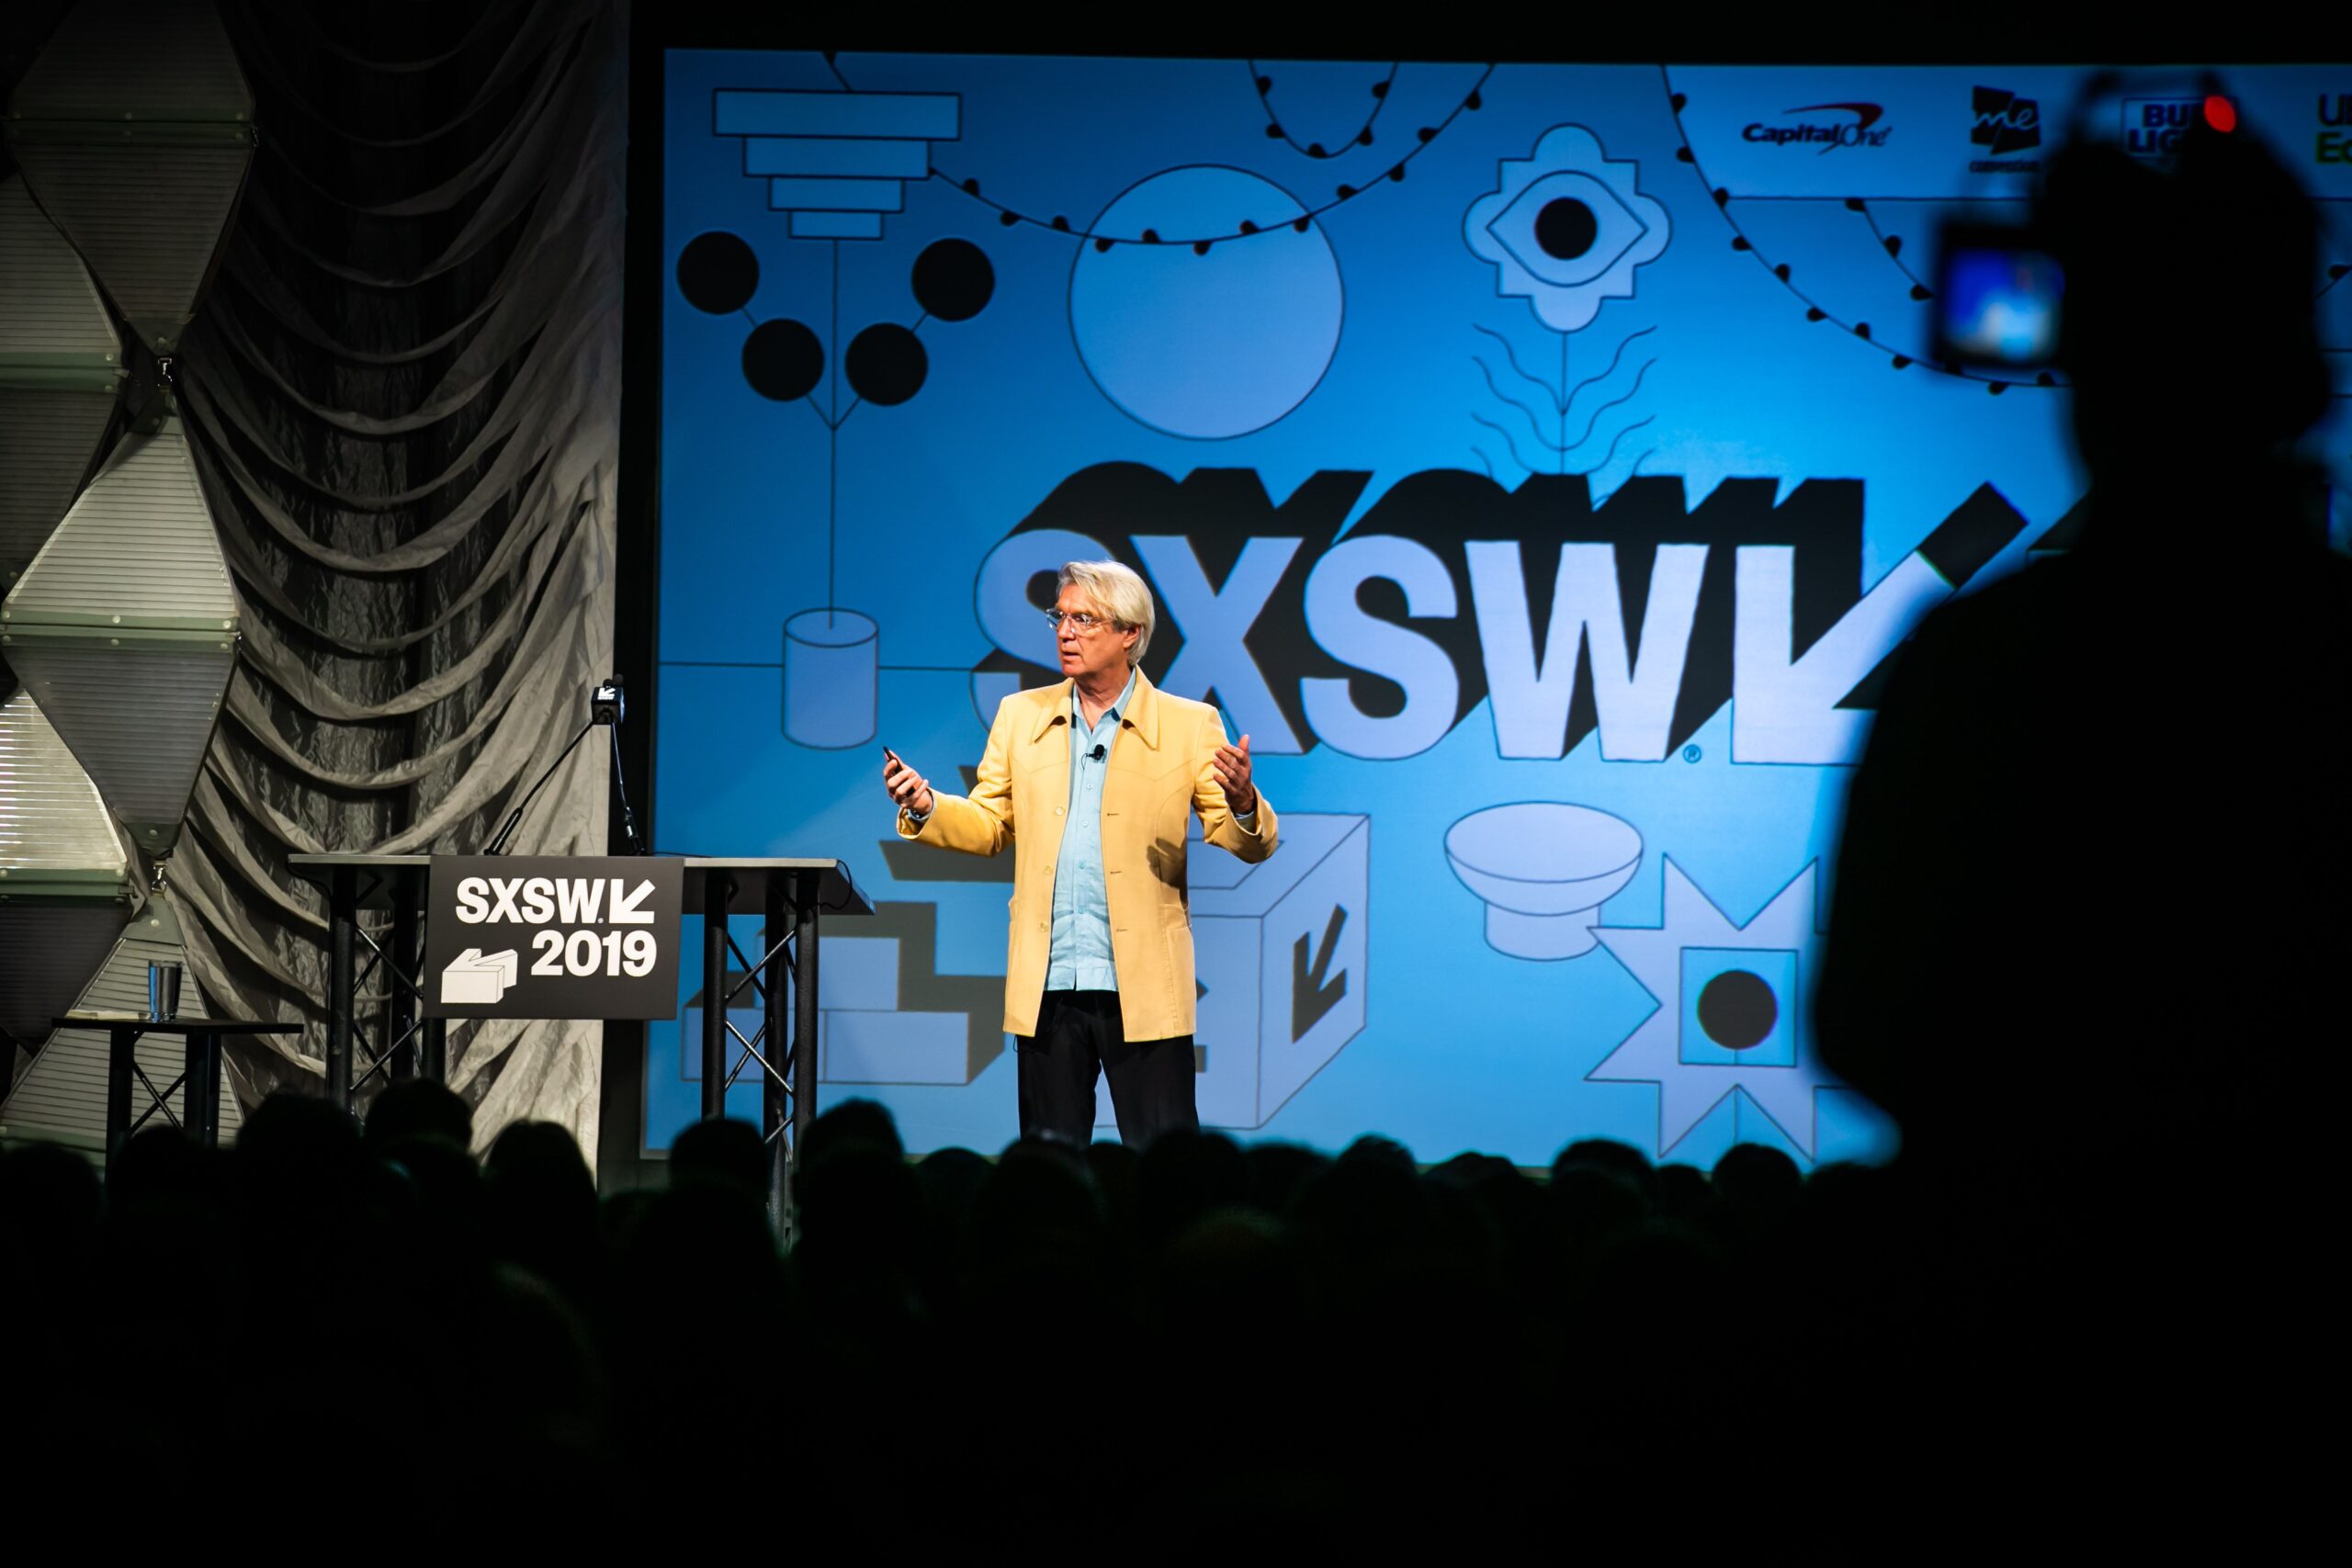 SXSW Conference in Austin, Texas